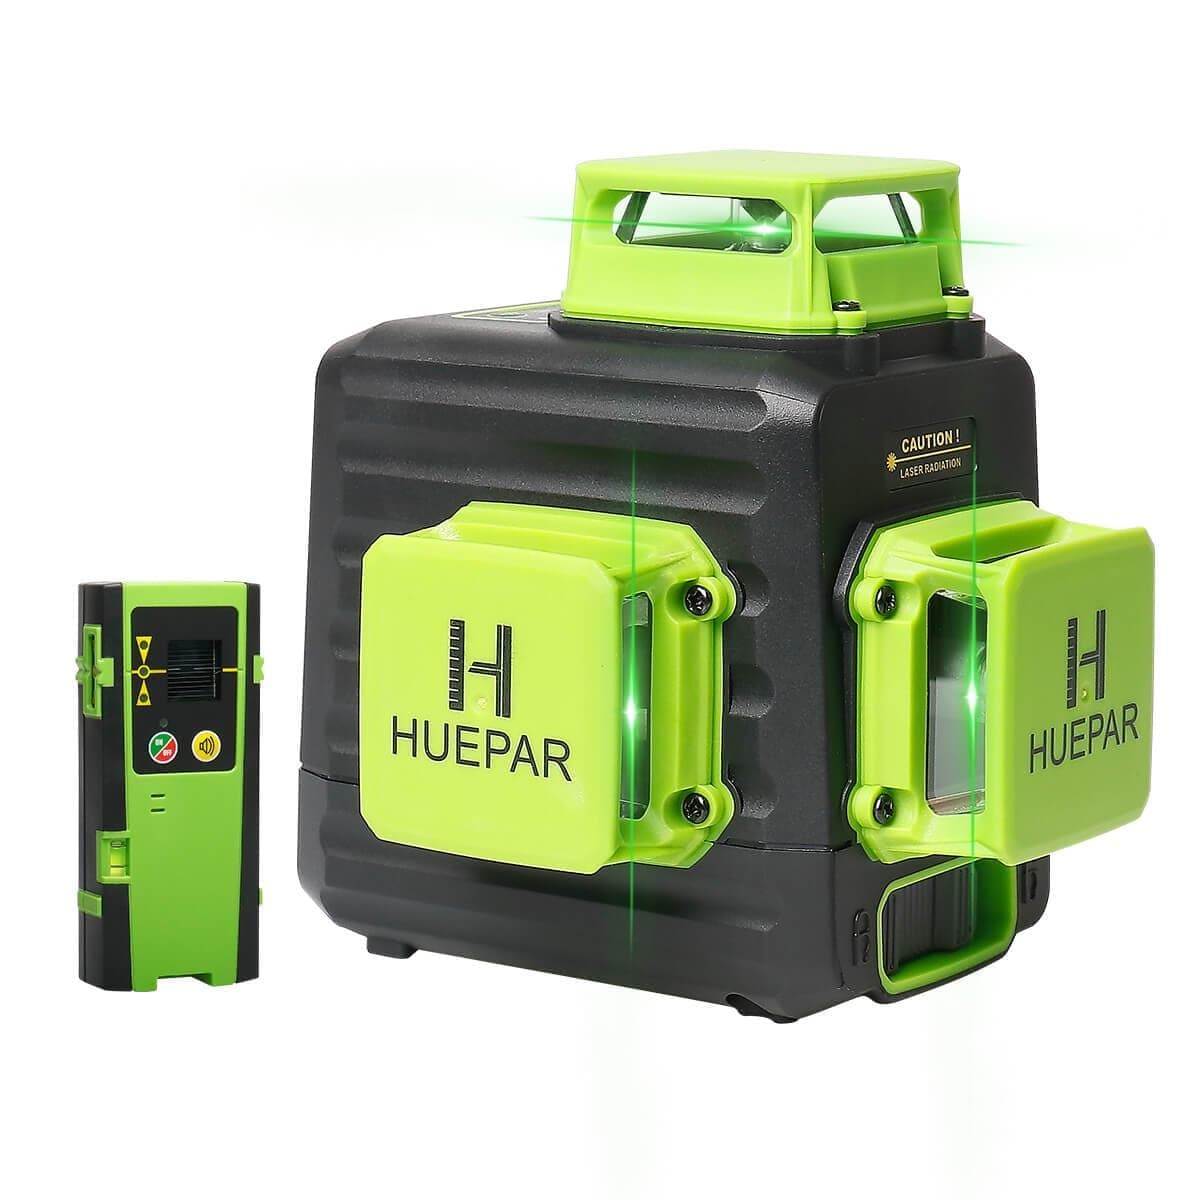 Huepar 4 x 360 degree 16 Lines Self-leveling Laser Level 4D Green Beam  Cross Line Tiling Floor Laser Leveler Tools with Two Li-ion Batteries  LS04CG 